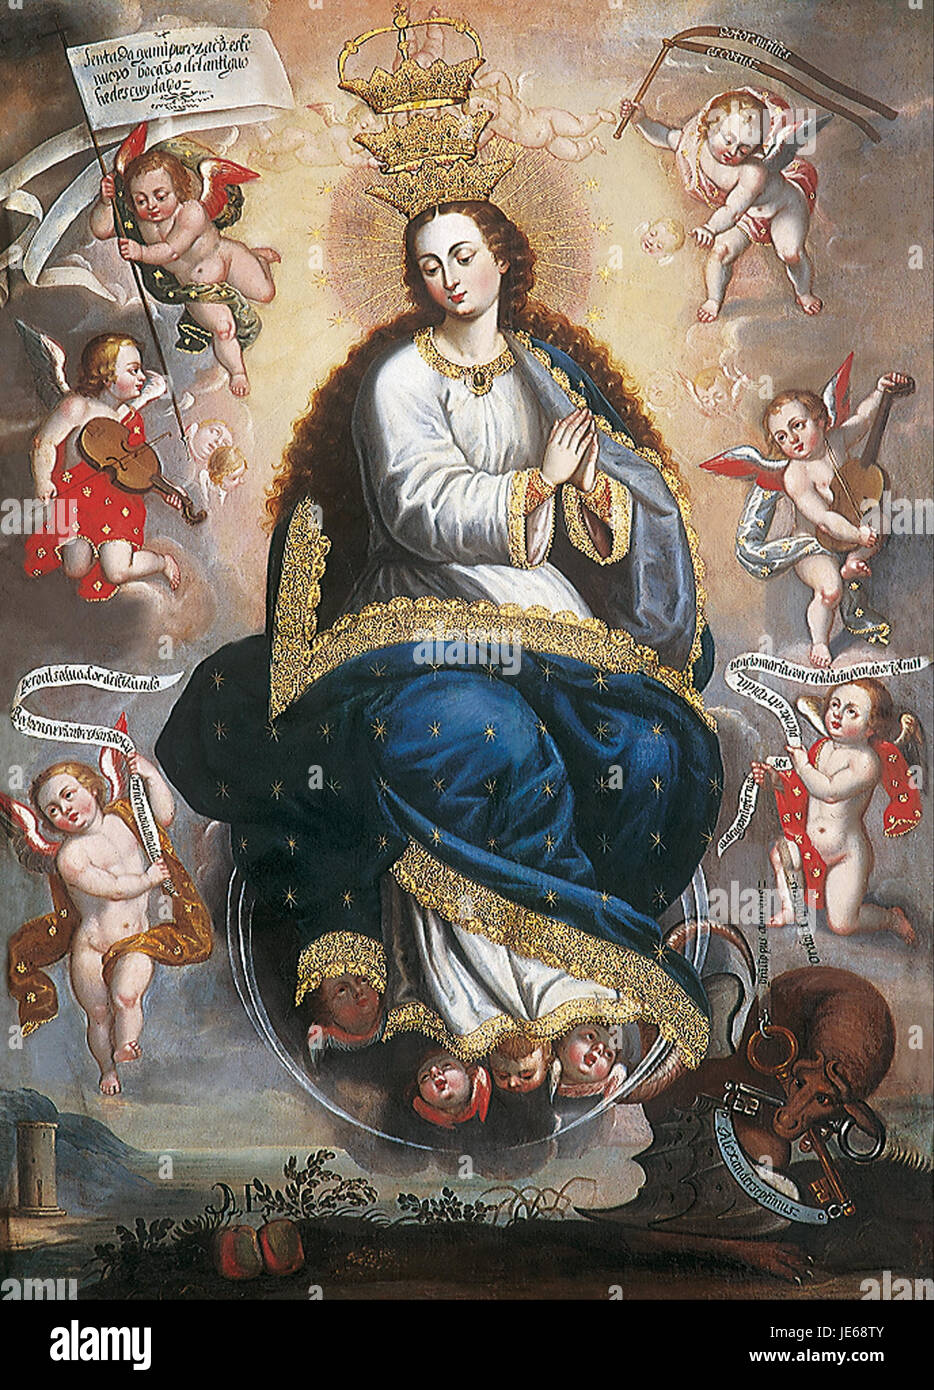 Basilio de Santa Cruz Pumacallao - Immaculate Virgin Victorious over the Serpent of Heresy - Stock Photo